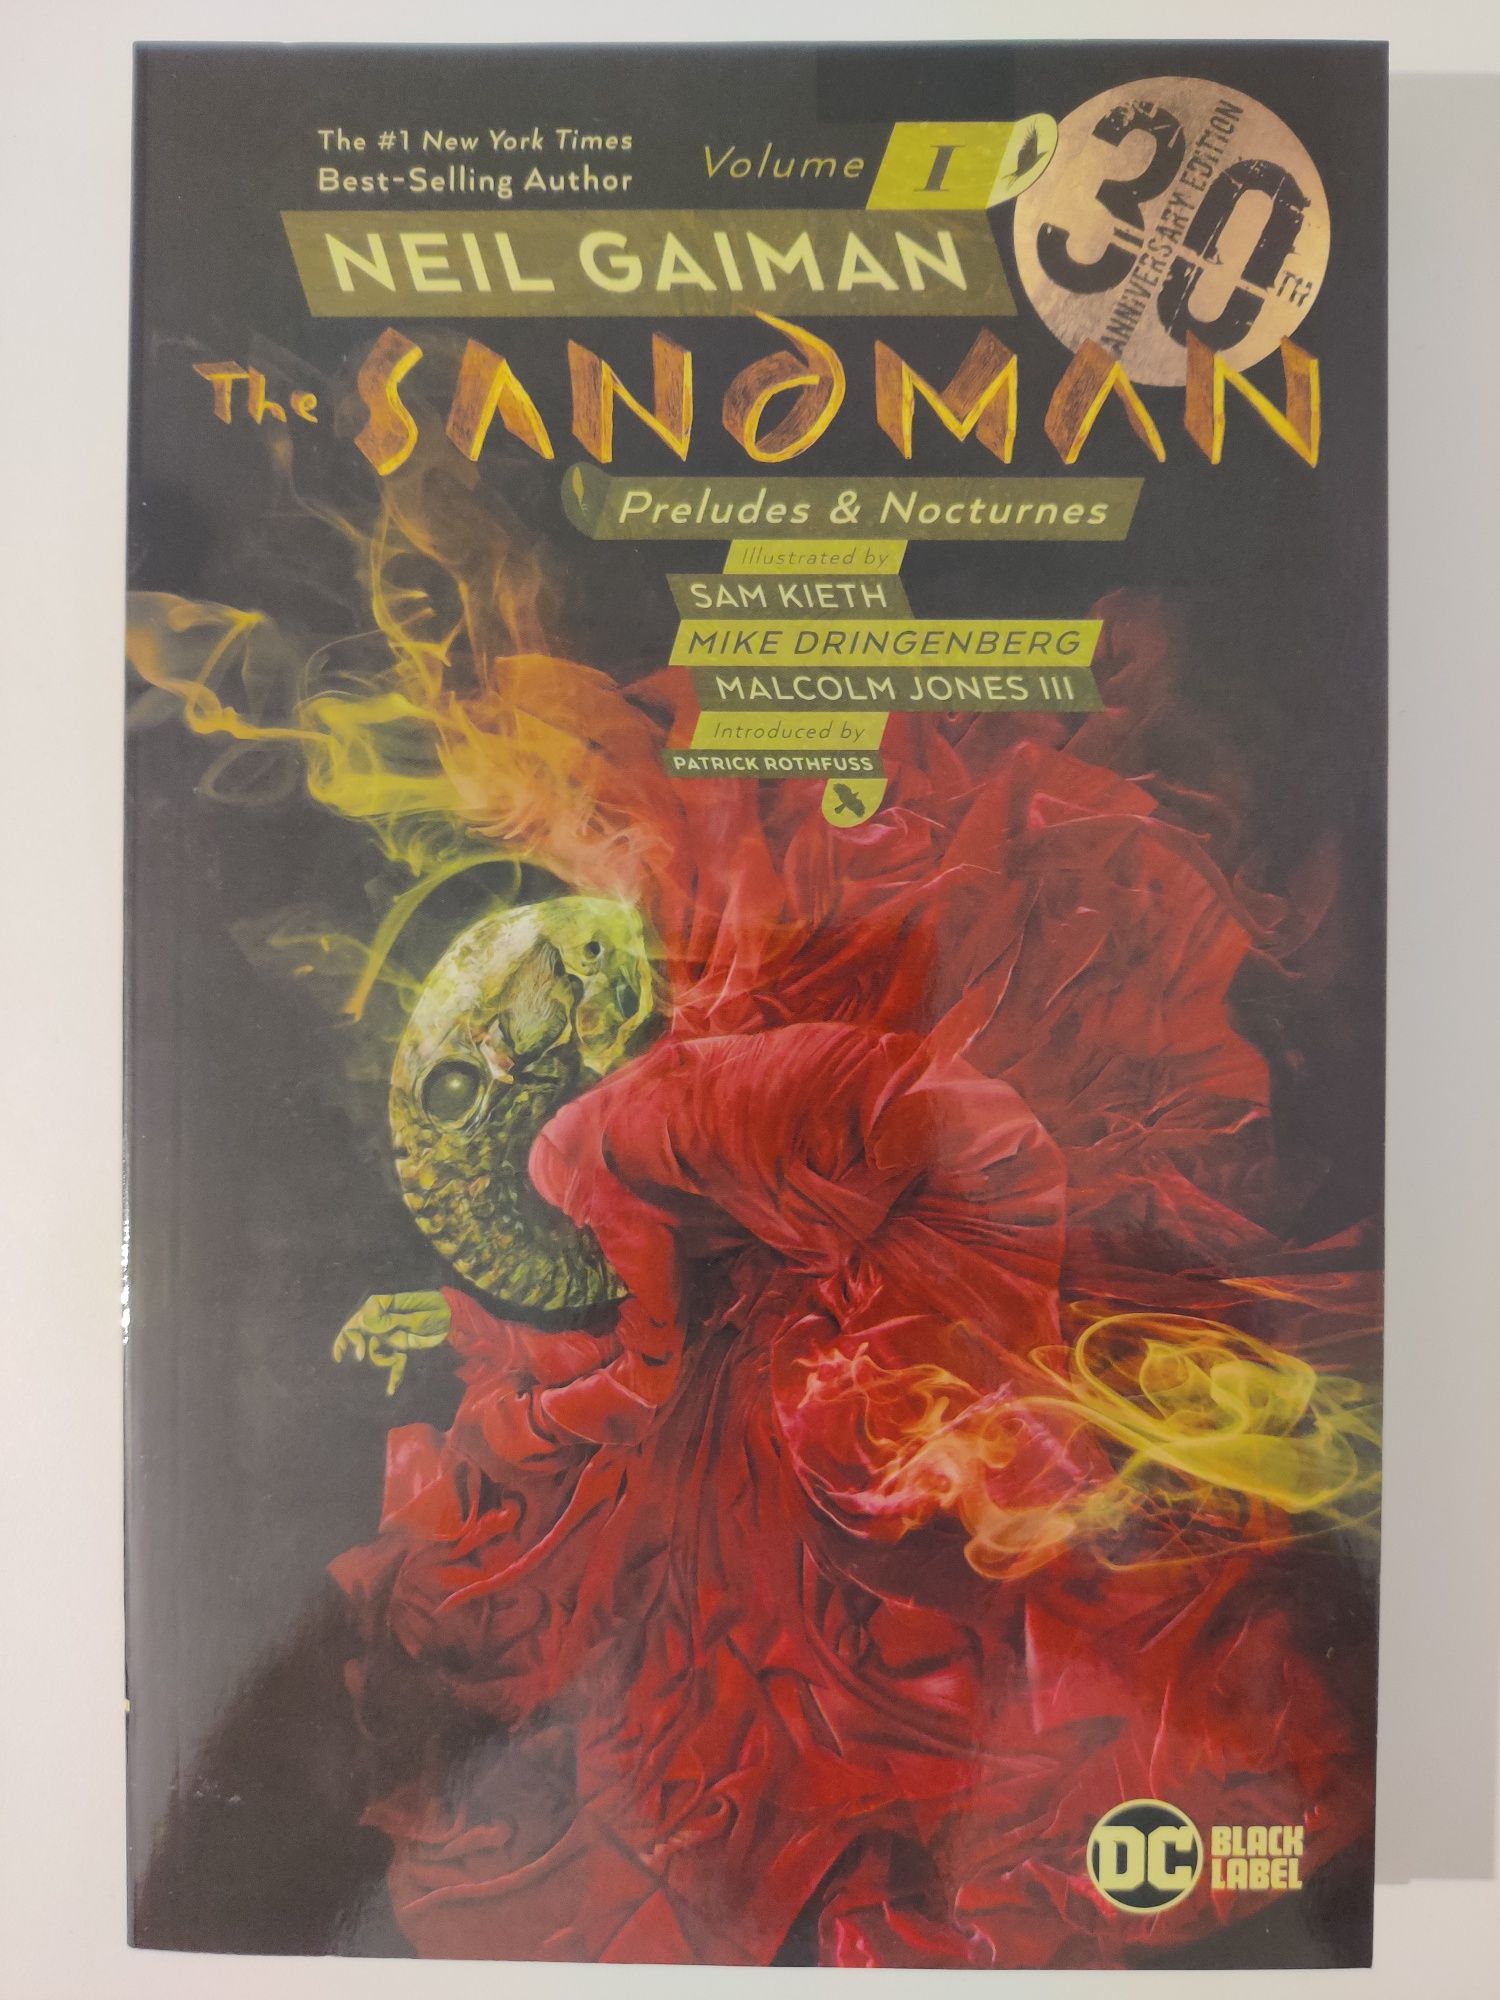 Colectie Neil Gaiman - The Sandman (30 year anniversary edition)